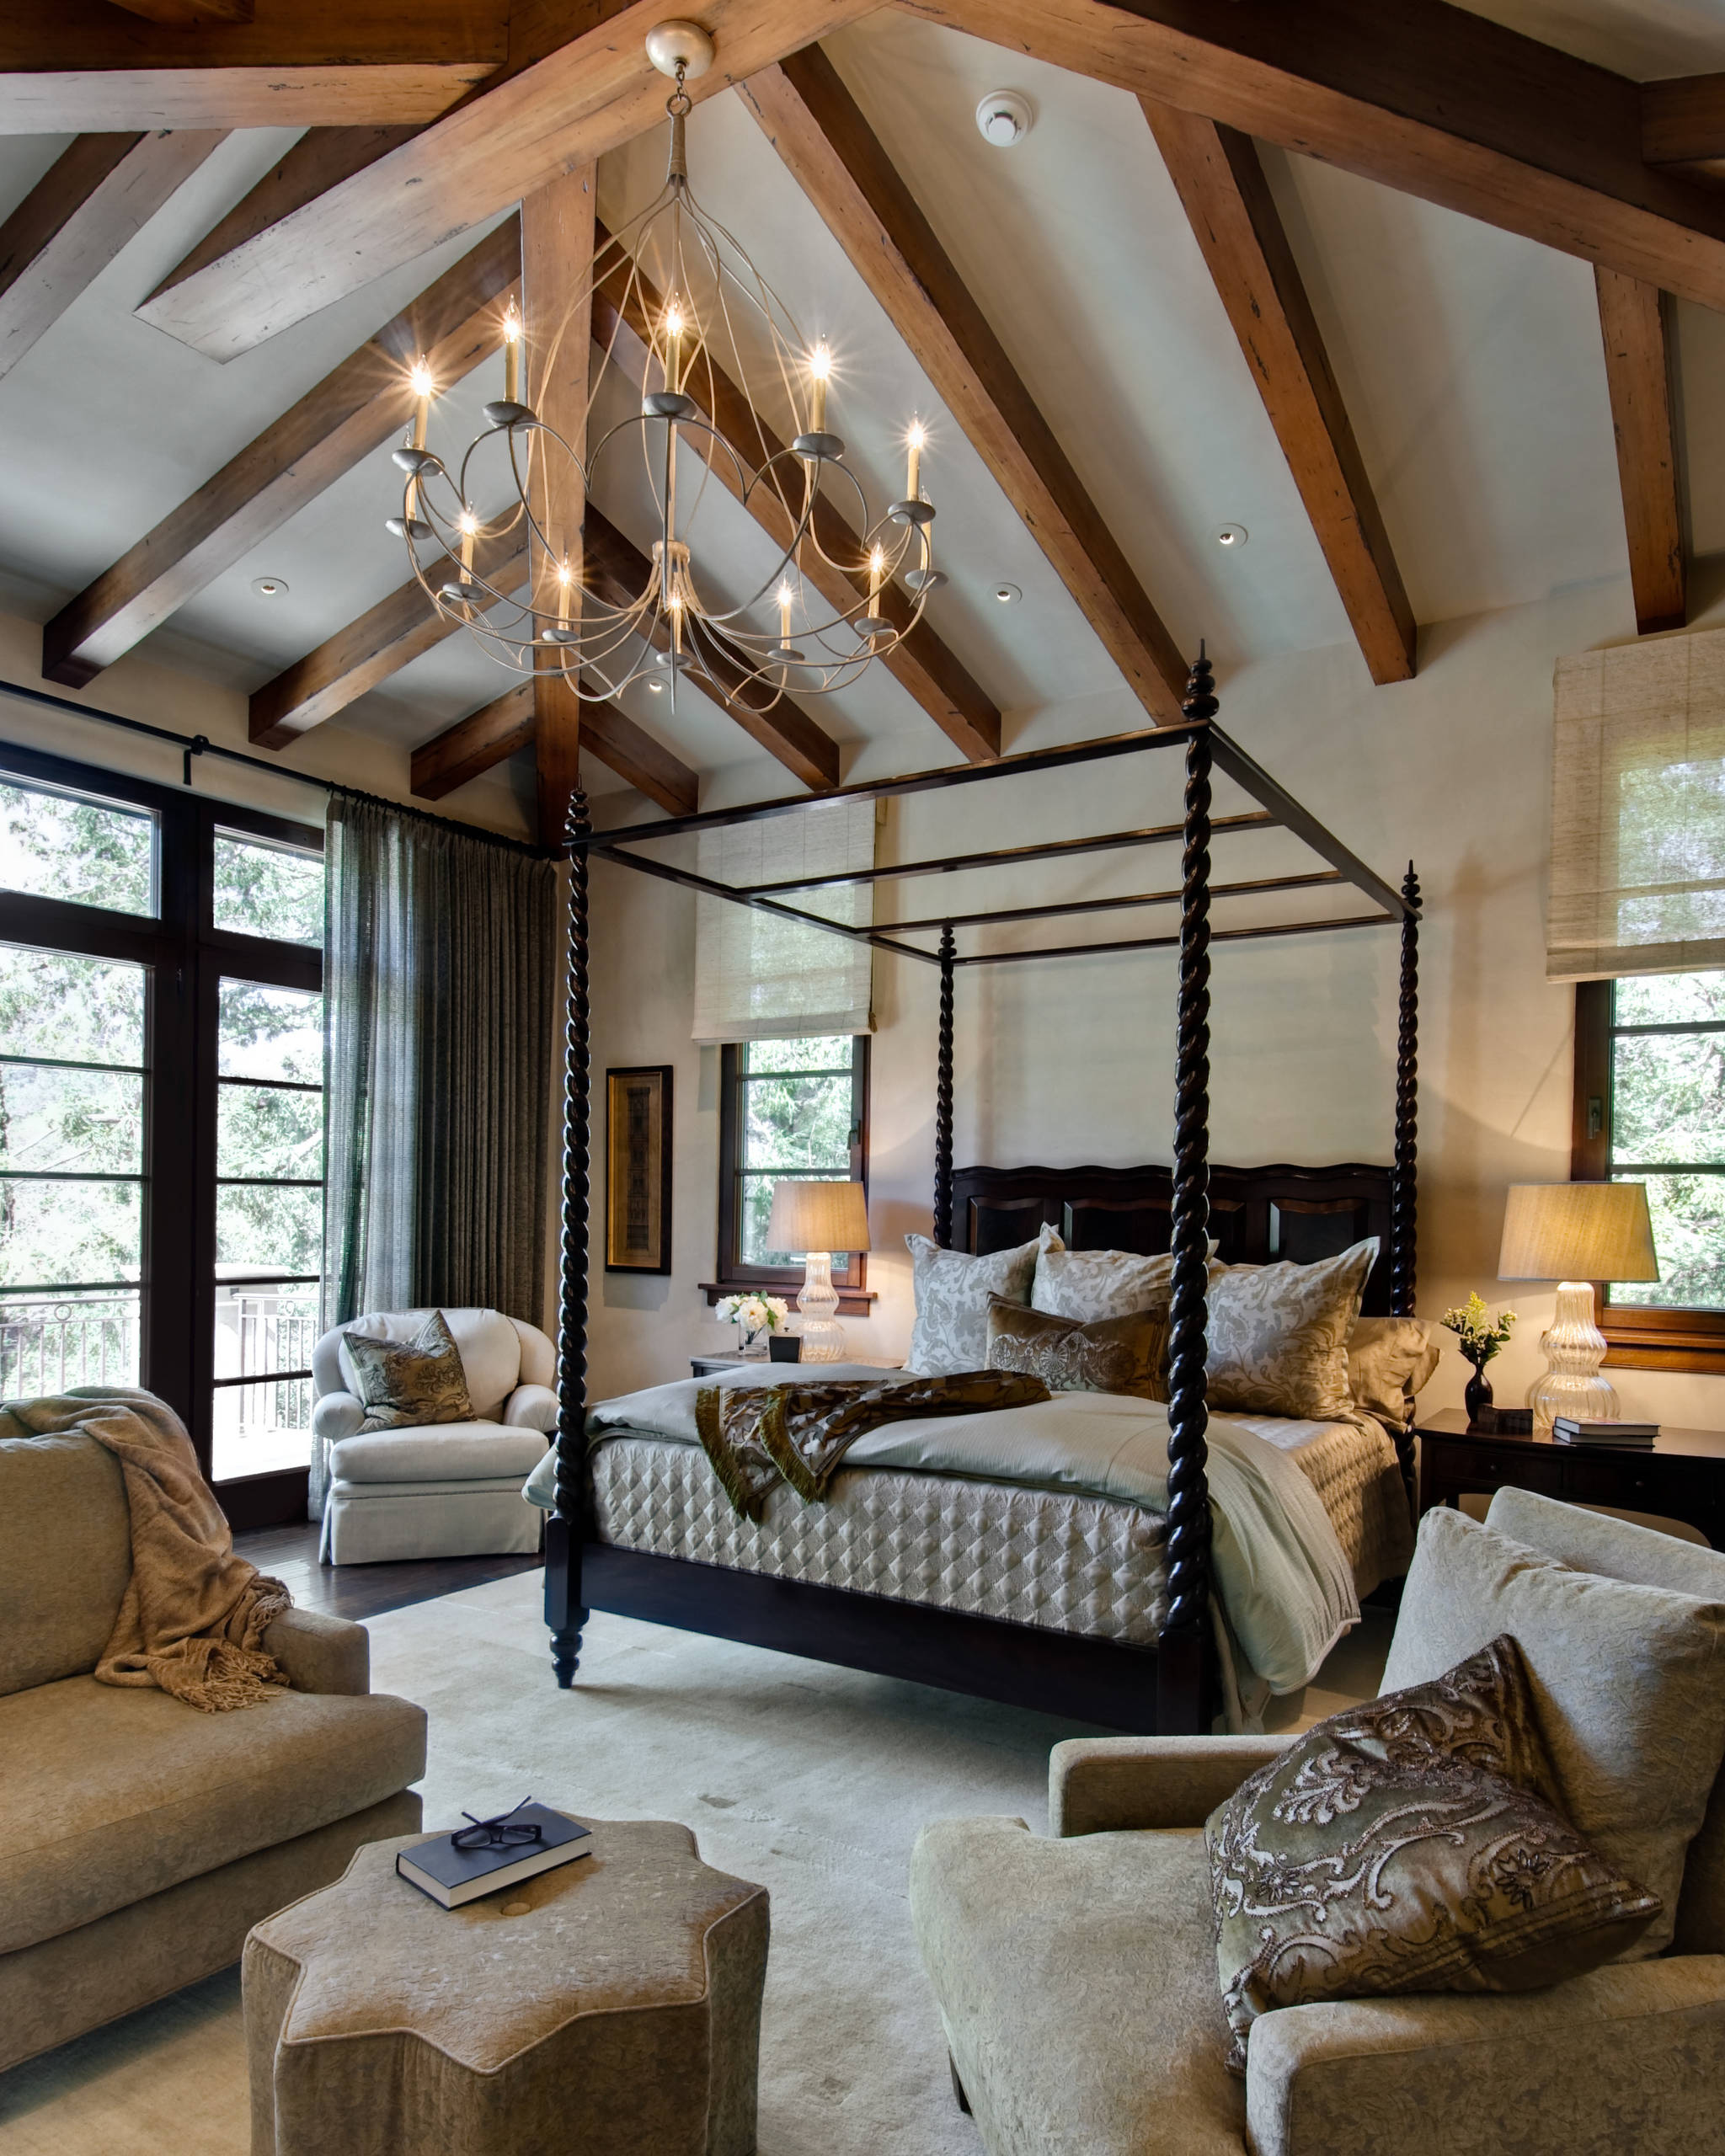 bedroom mediterranean designs captivating exist believe amazing california won